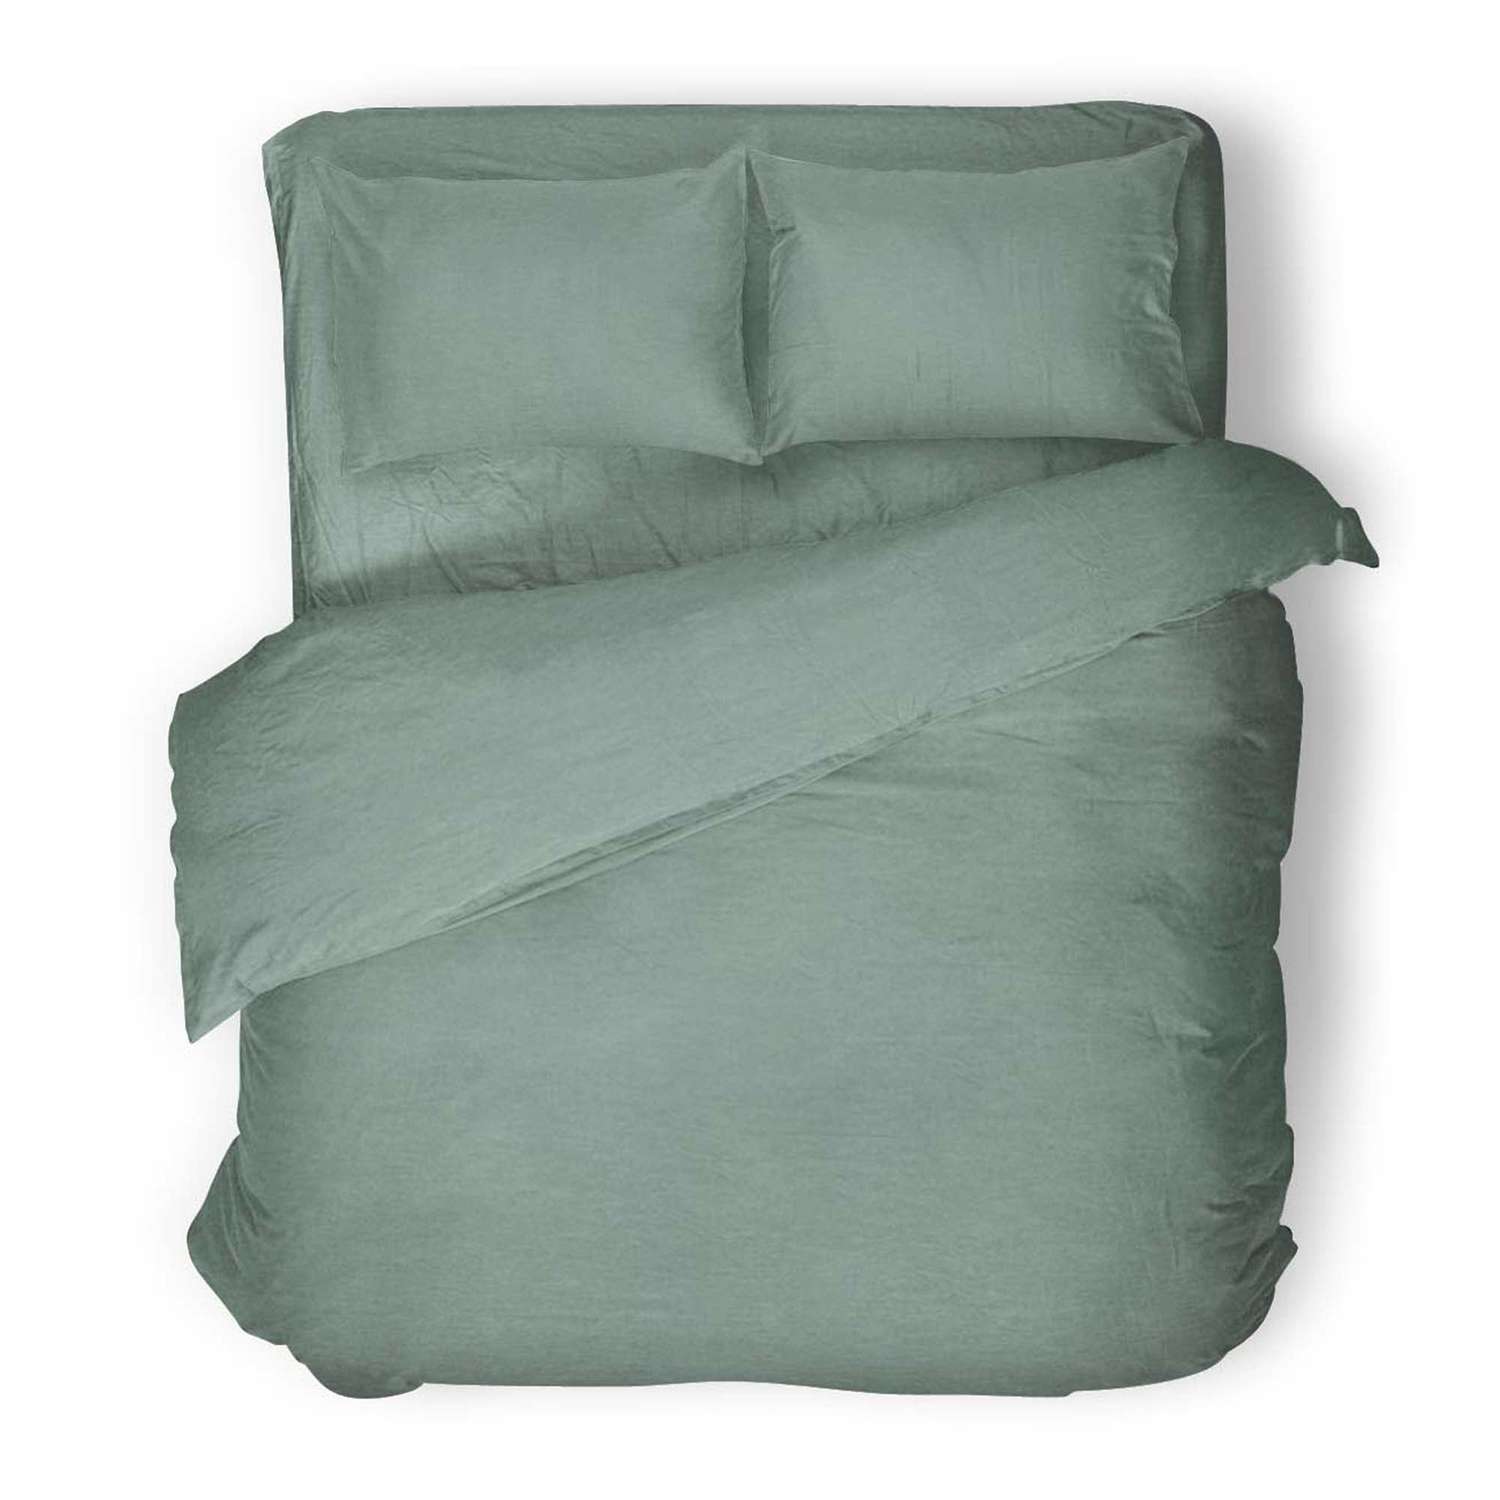 Комплект постельного белья Absolut 1.5СП Emerald наволочки 70х70см меланж - фото 1